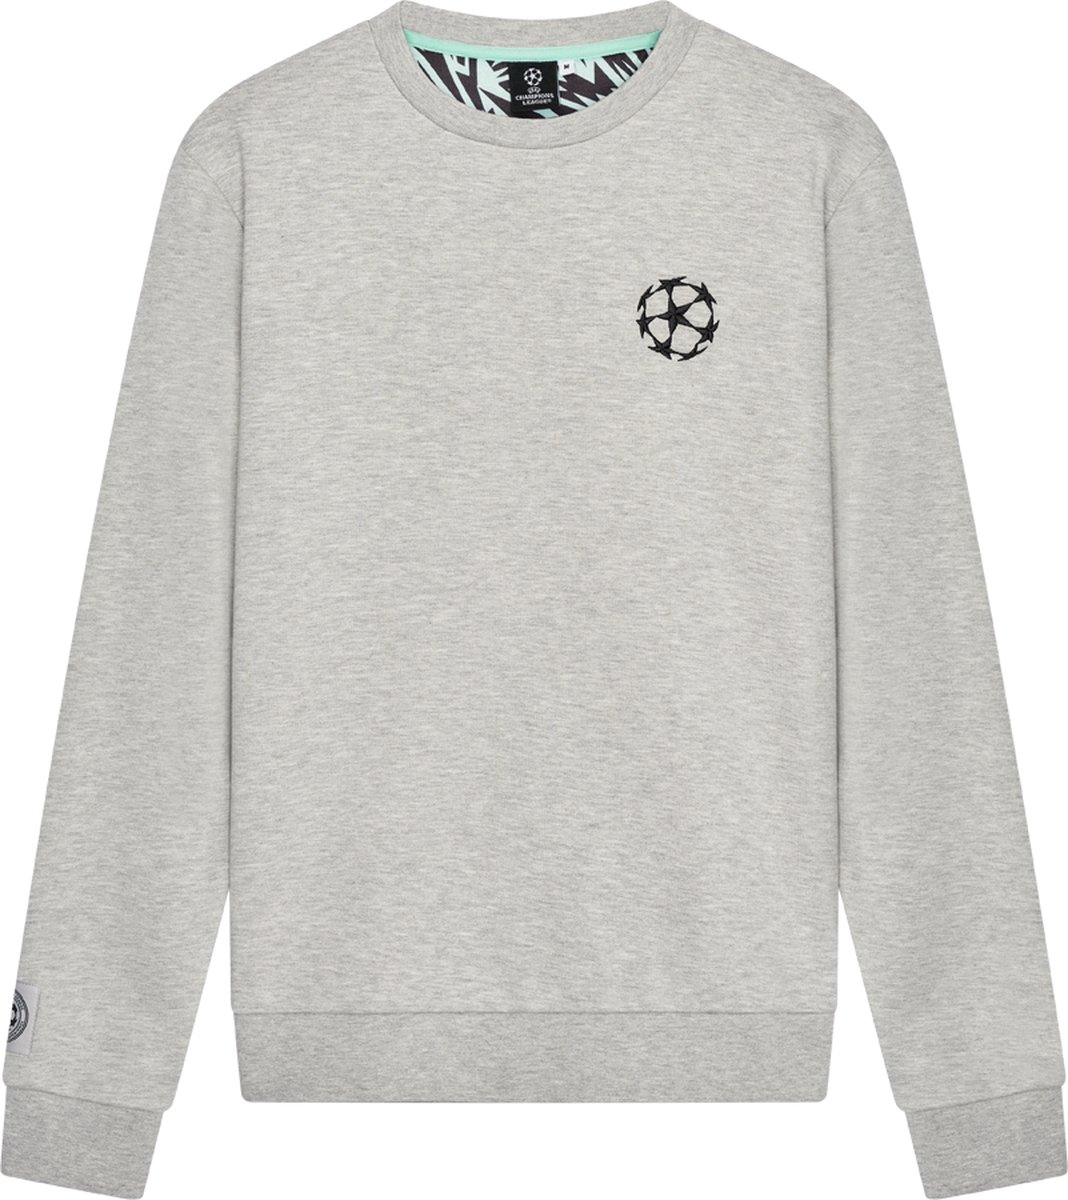 Champions League lifestyle sweater - maat XS